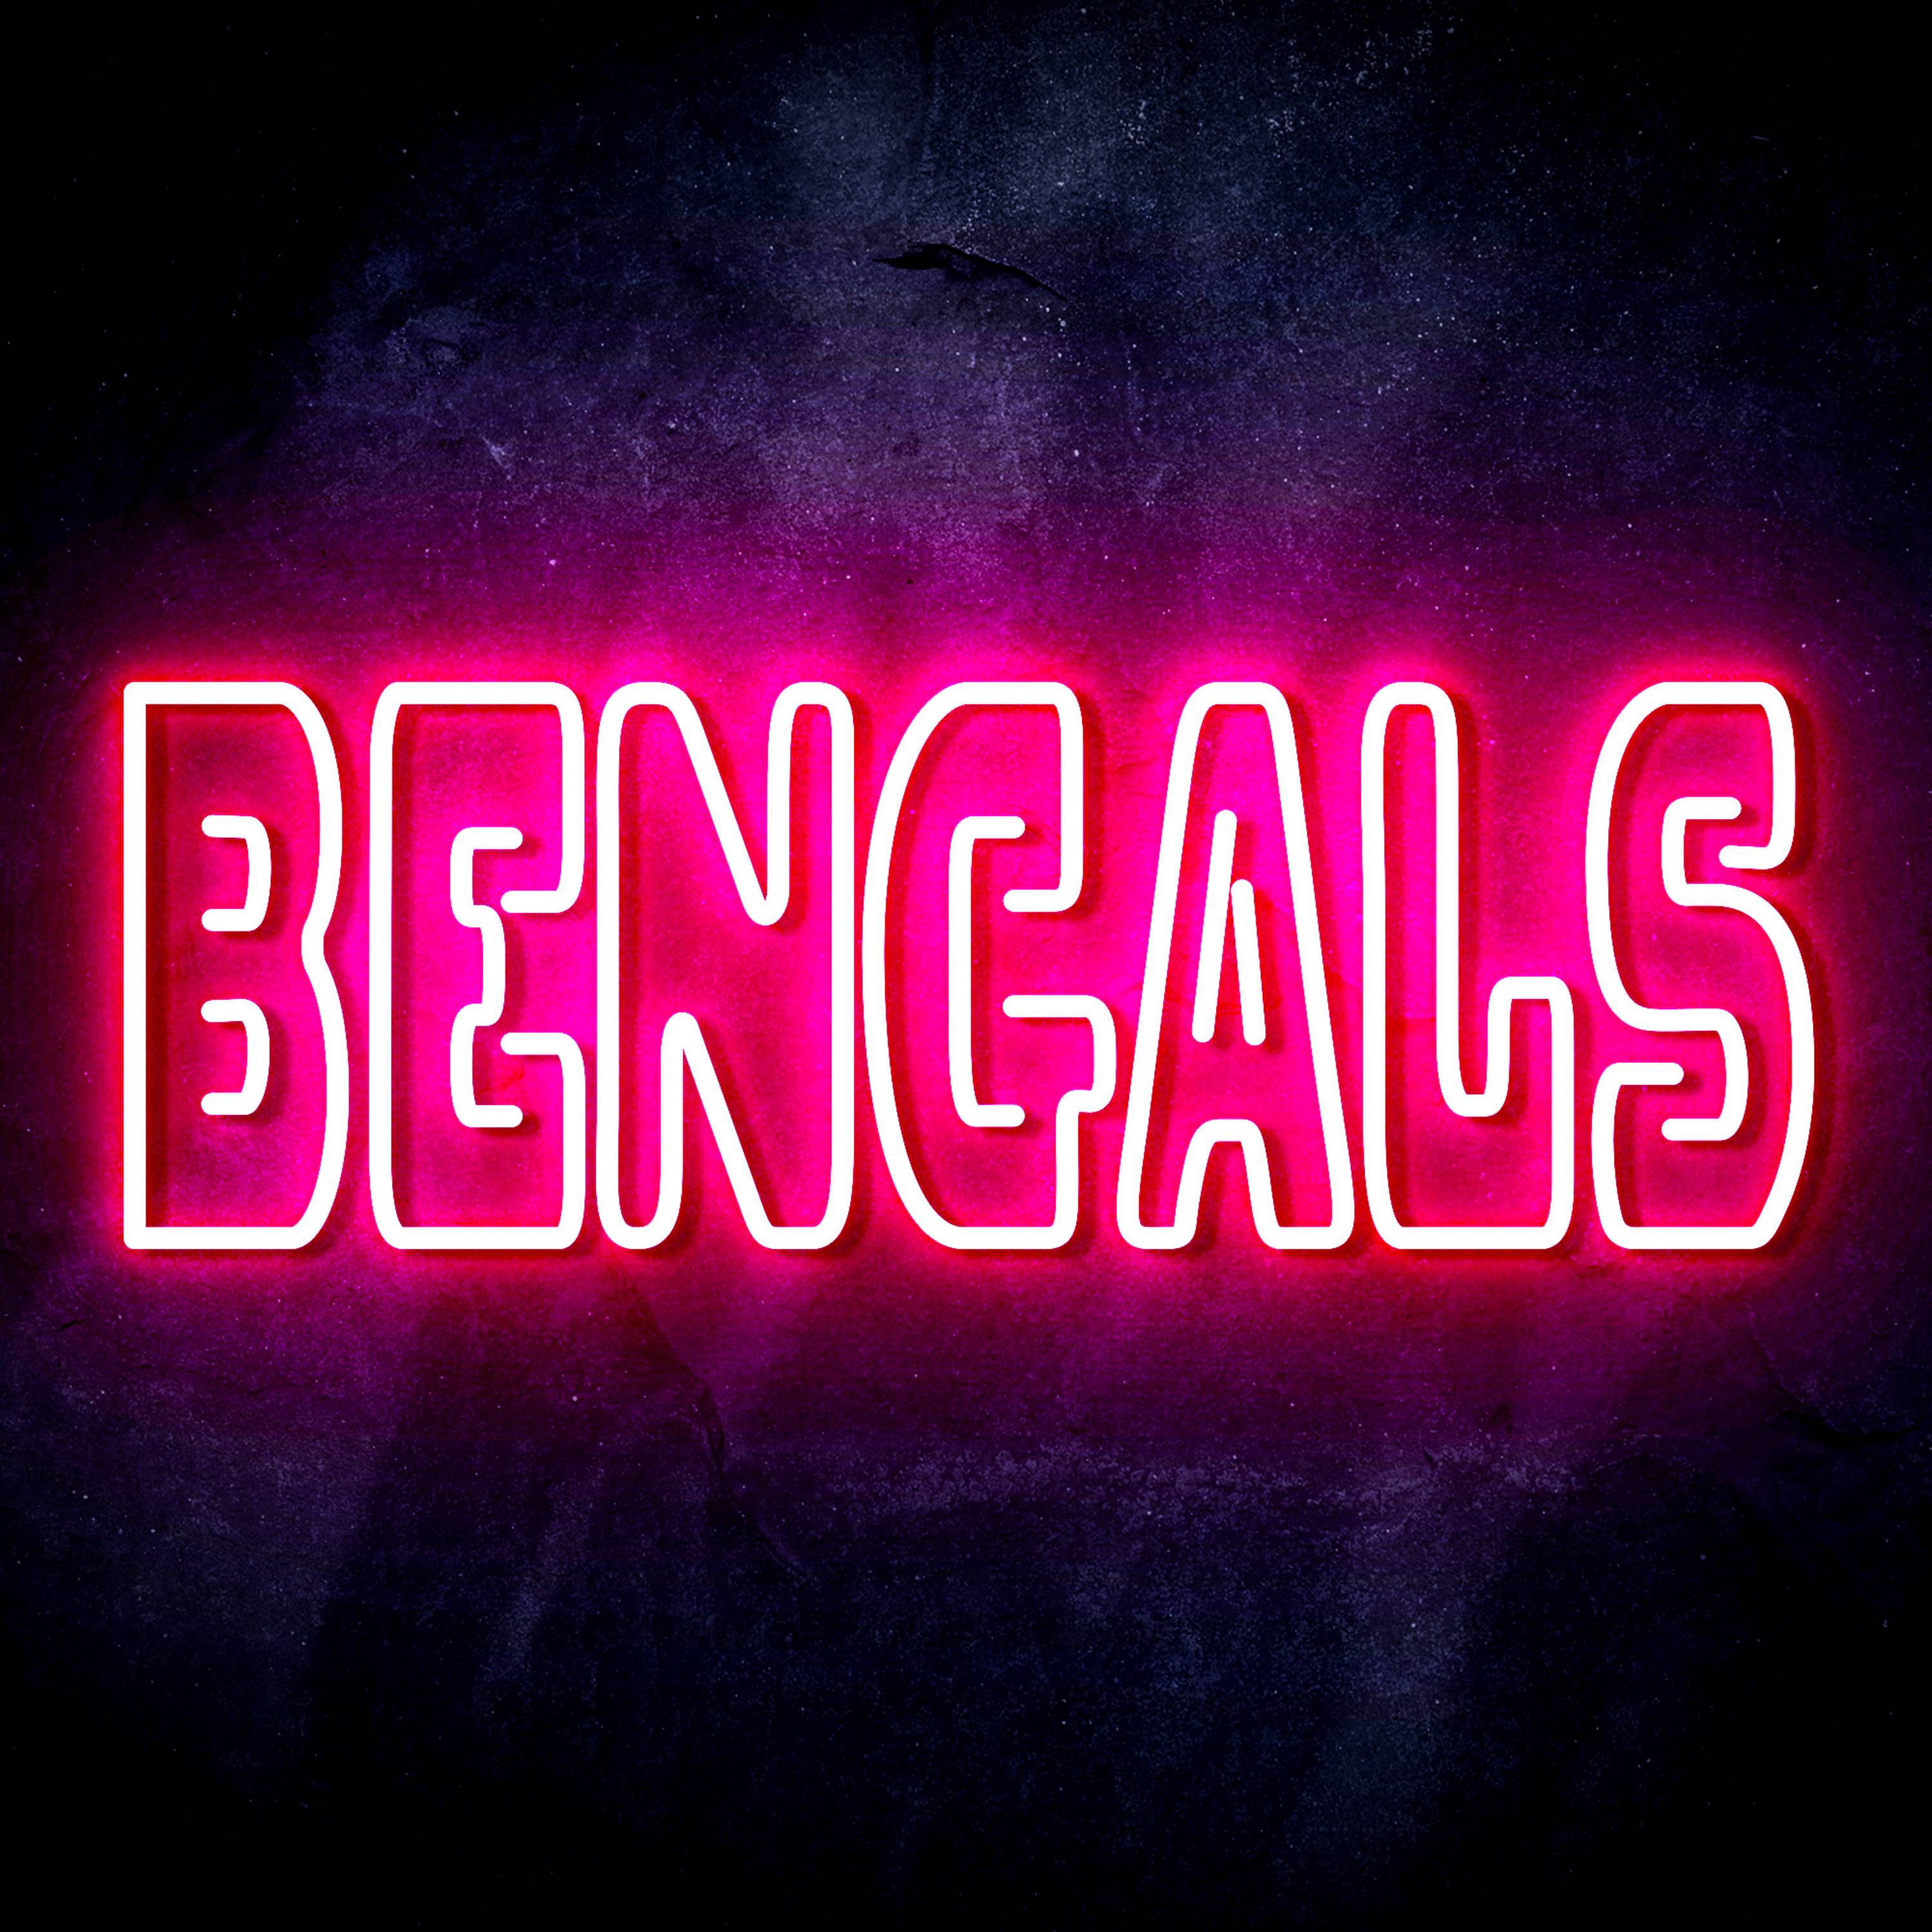 NFL BENGALS LED Neon Sign